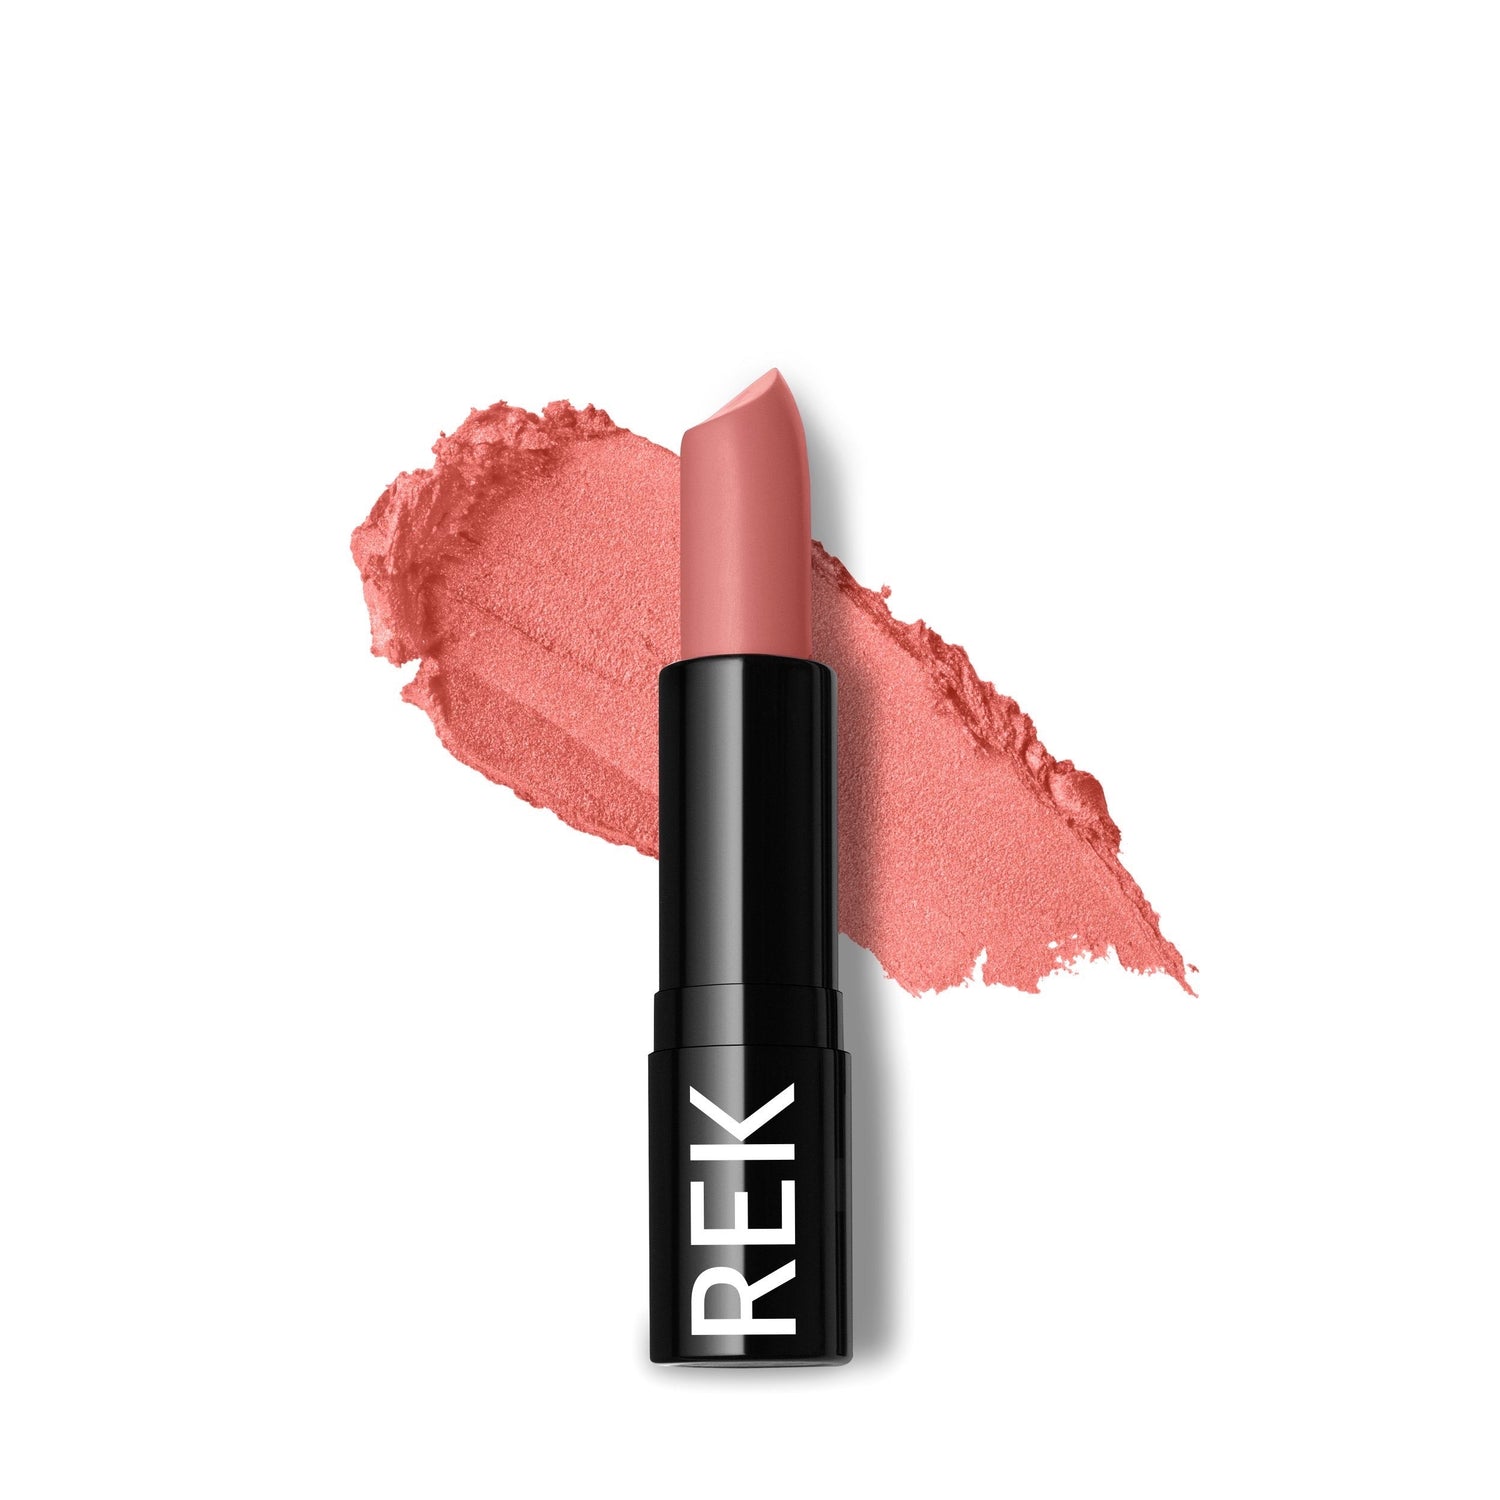 Cameron| Luxury Matte Lipstick | REK Cosmetics - Premium Lipstick from REK Cosmetics - Just $20! Shop now at REK Cosmetics